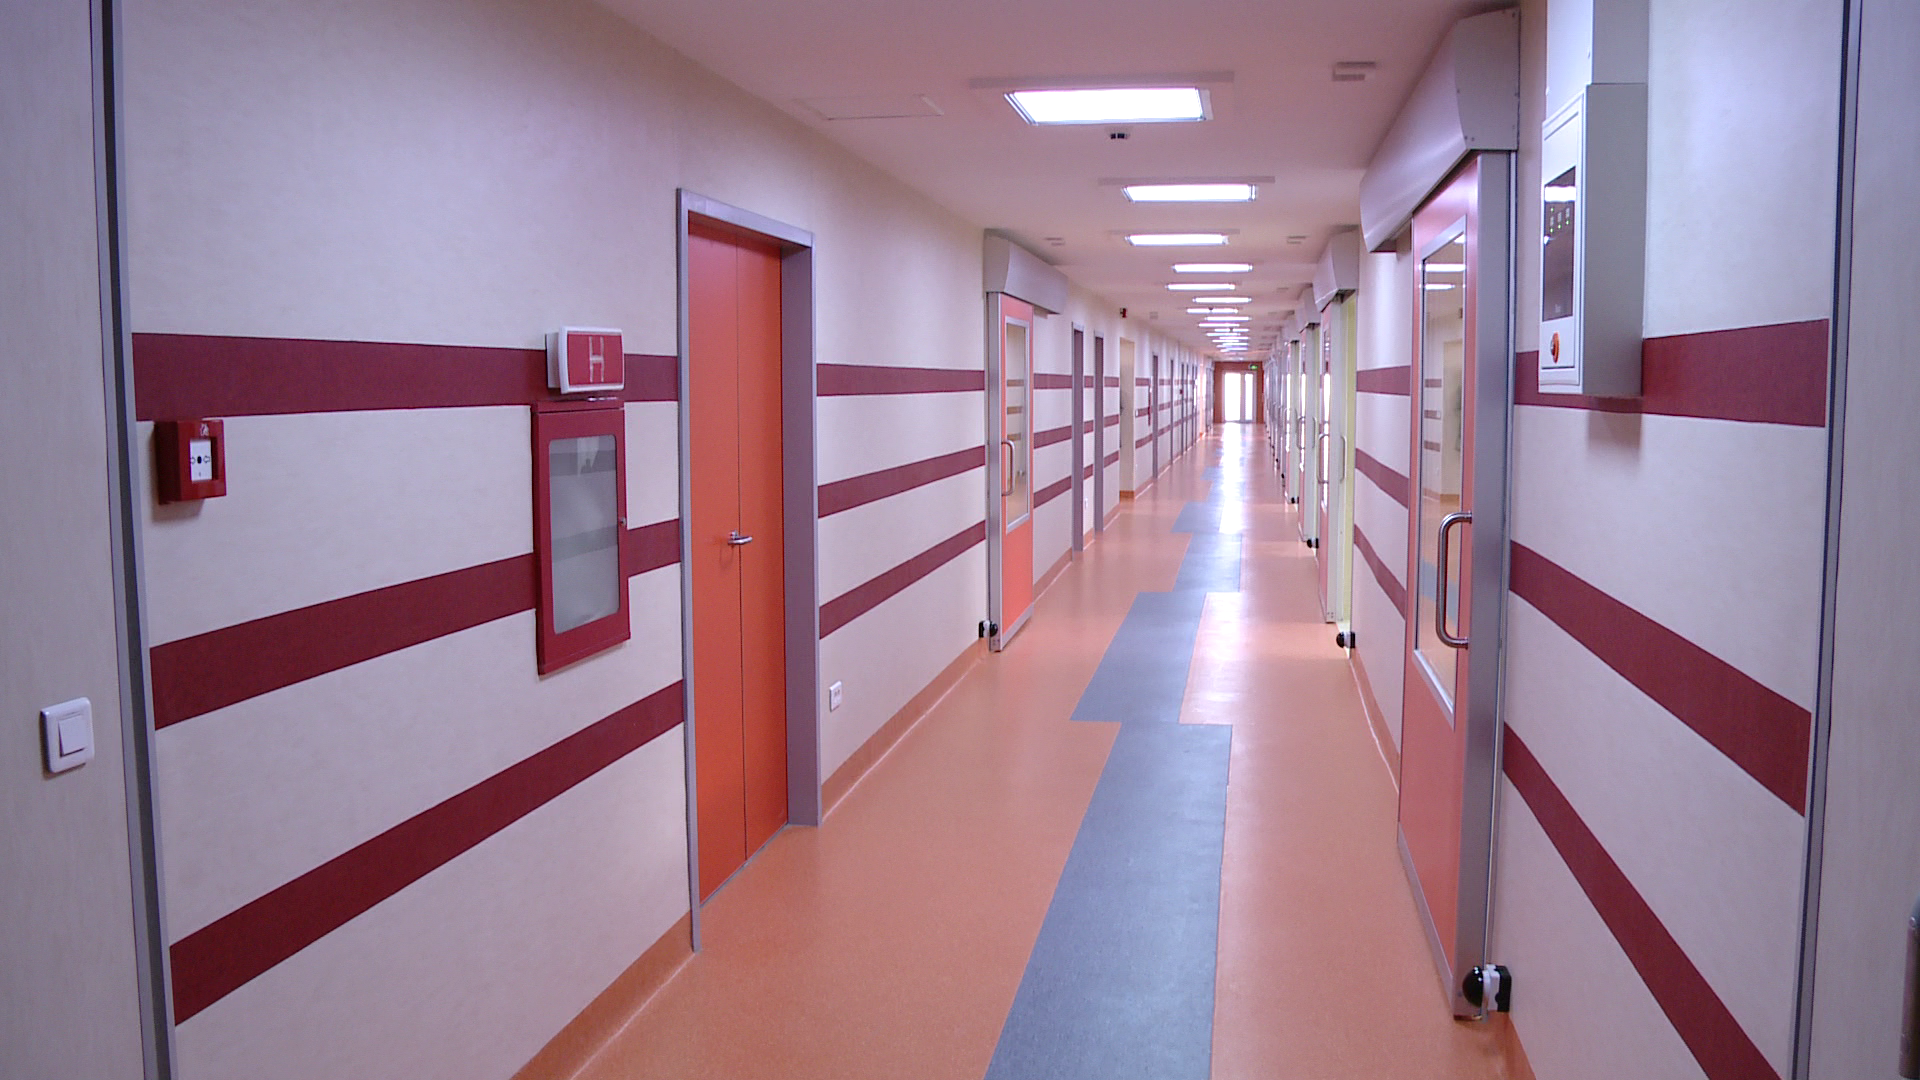 ATI Spitalul Judetean de Urgenta Timisoara